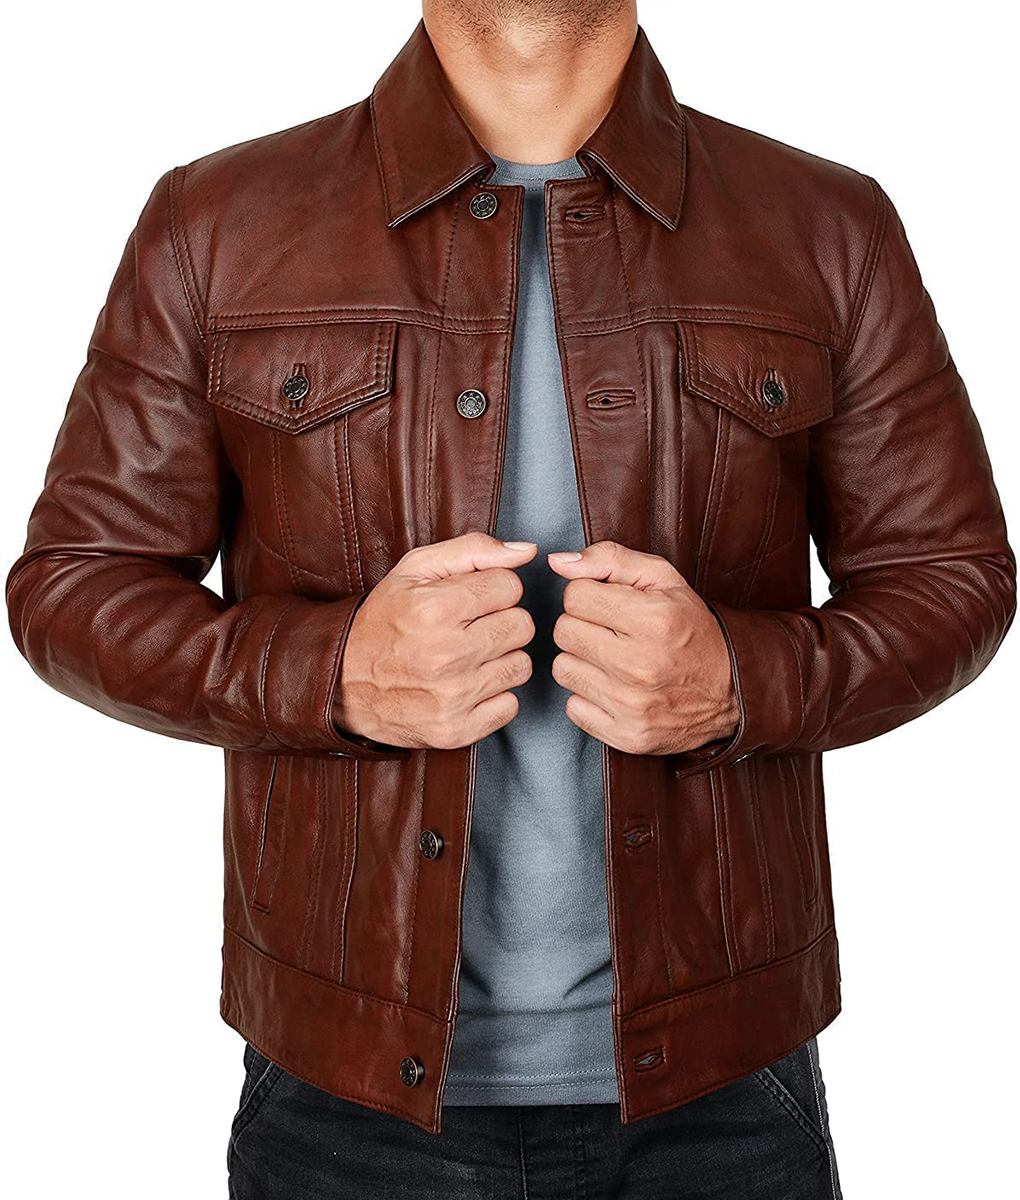 Owen Men's Brown Vintage Classic Leather Trucker Jacket